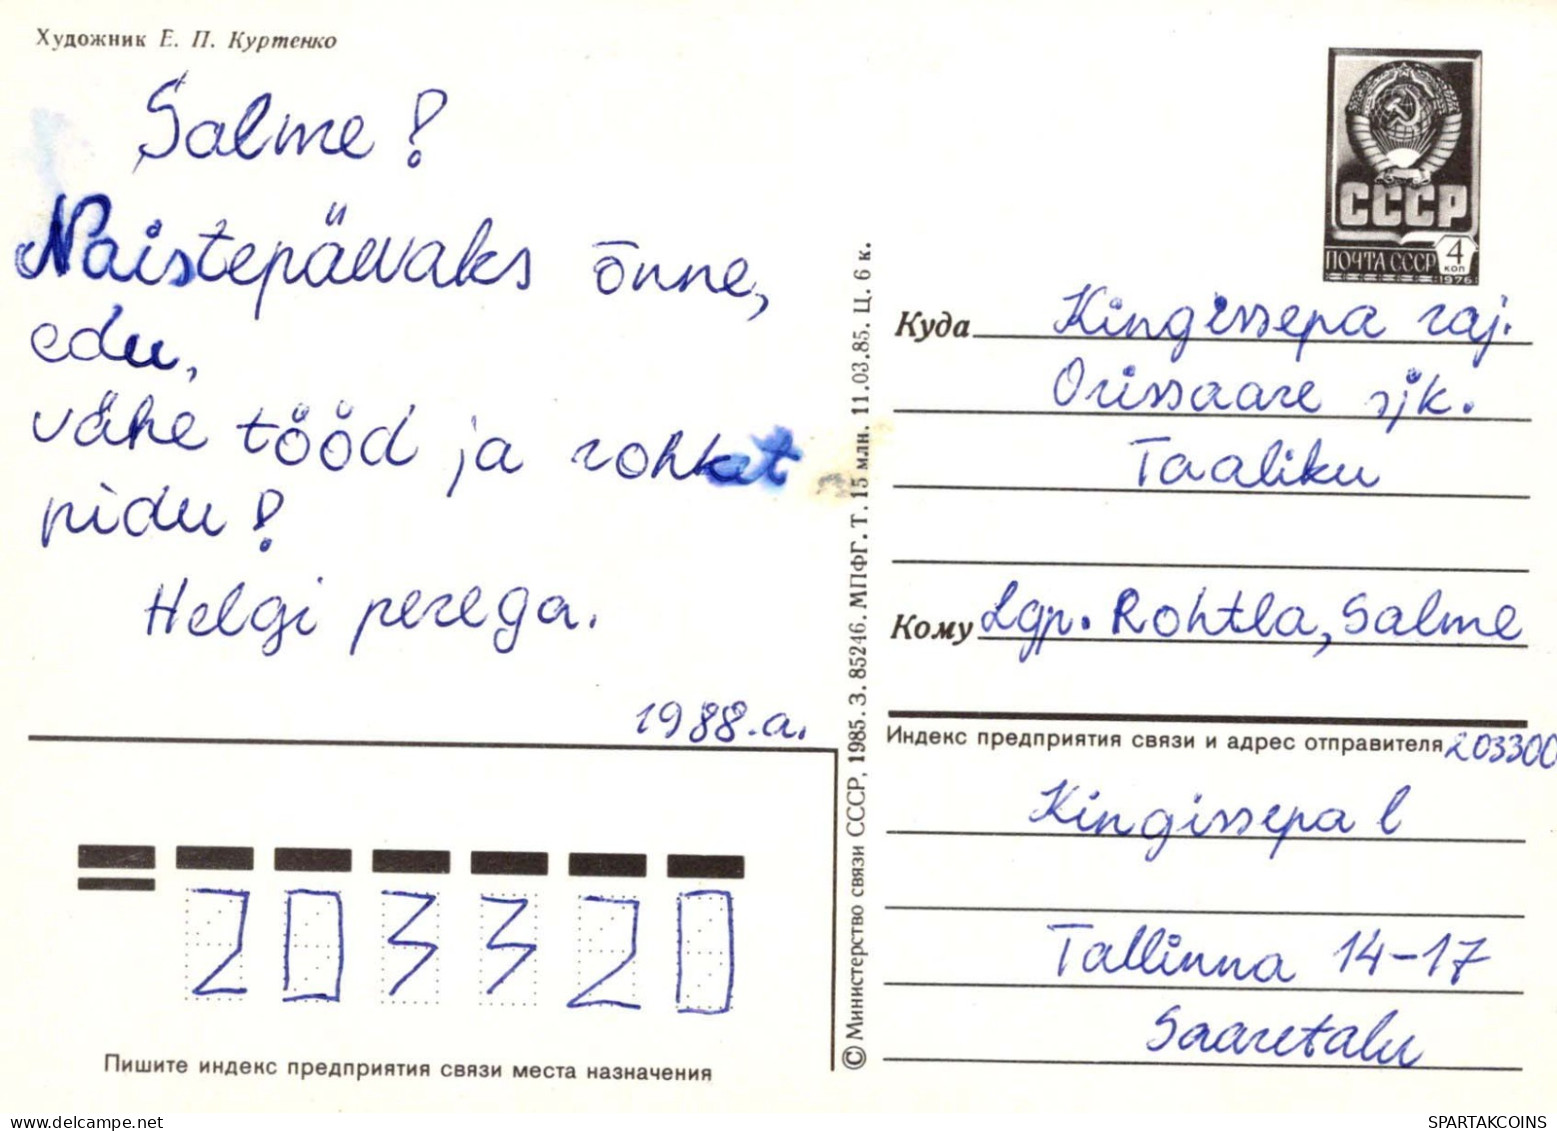 FIORI Vintage Cartolina CPSM #PAR720.A - Fleurs